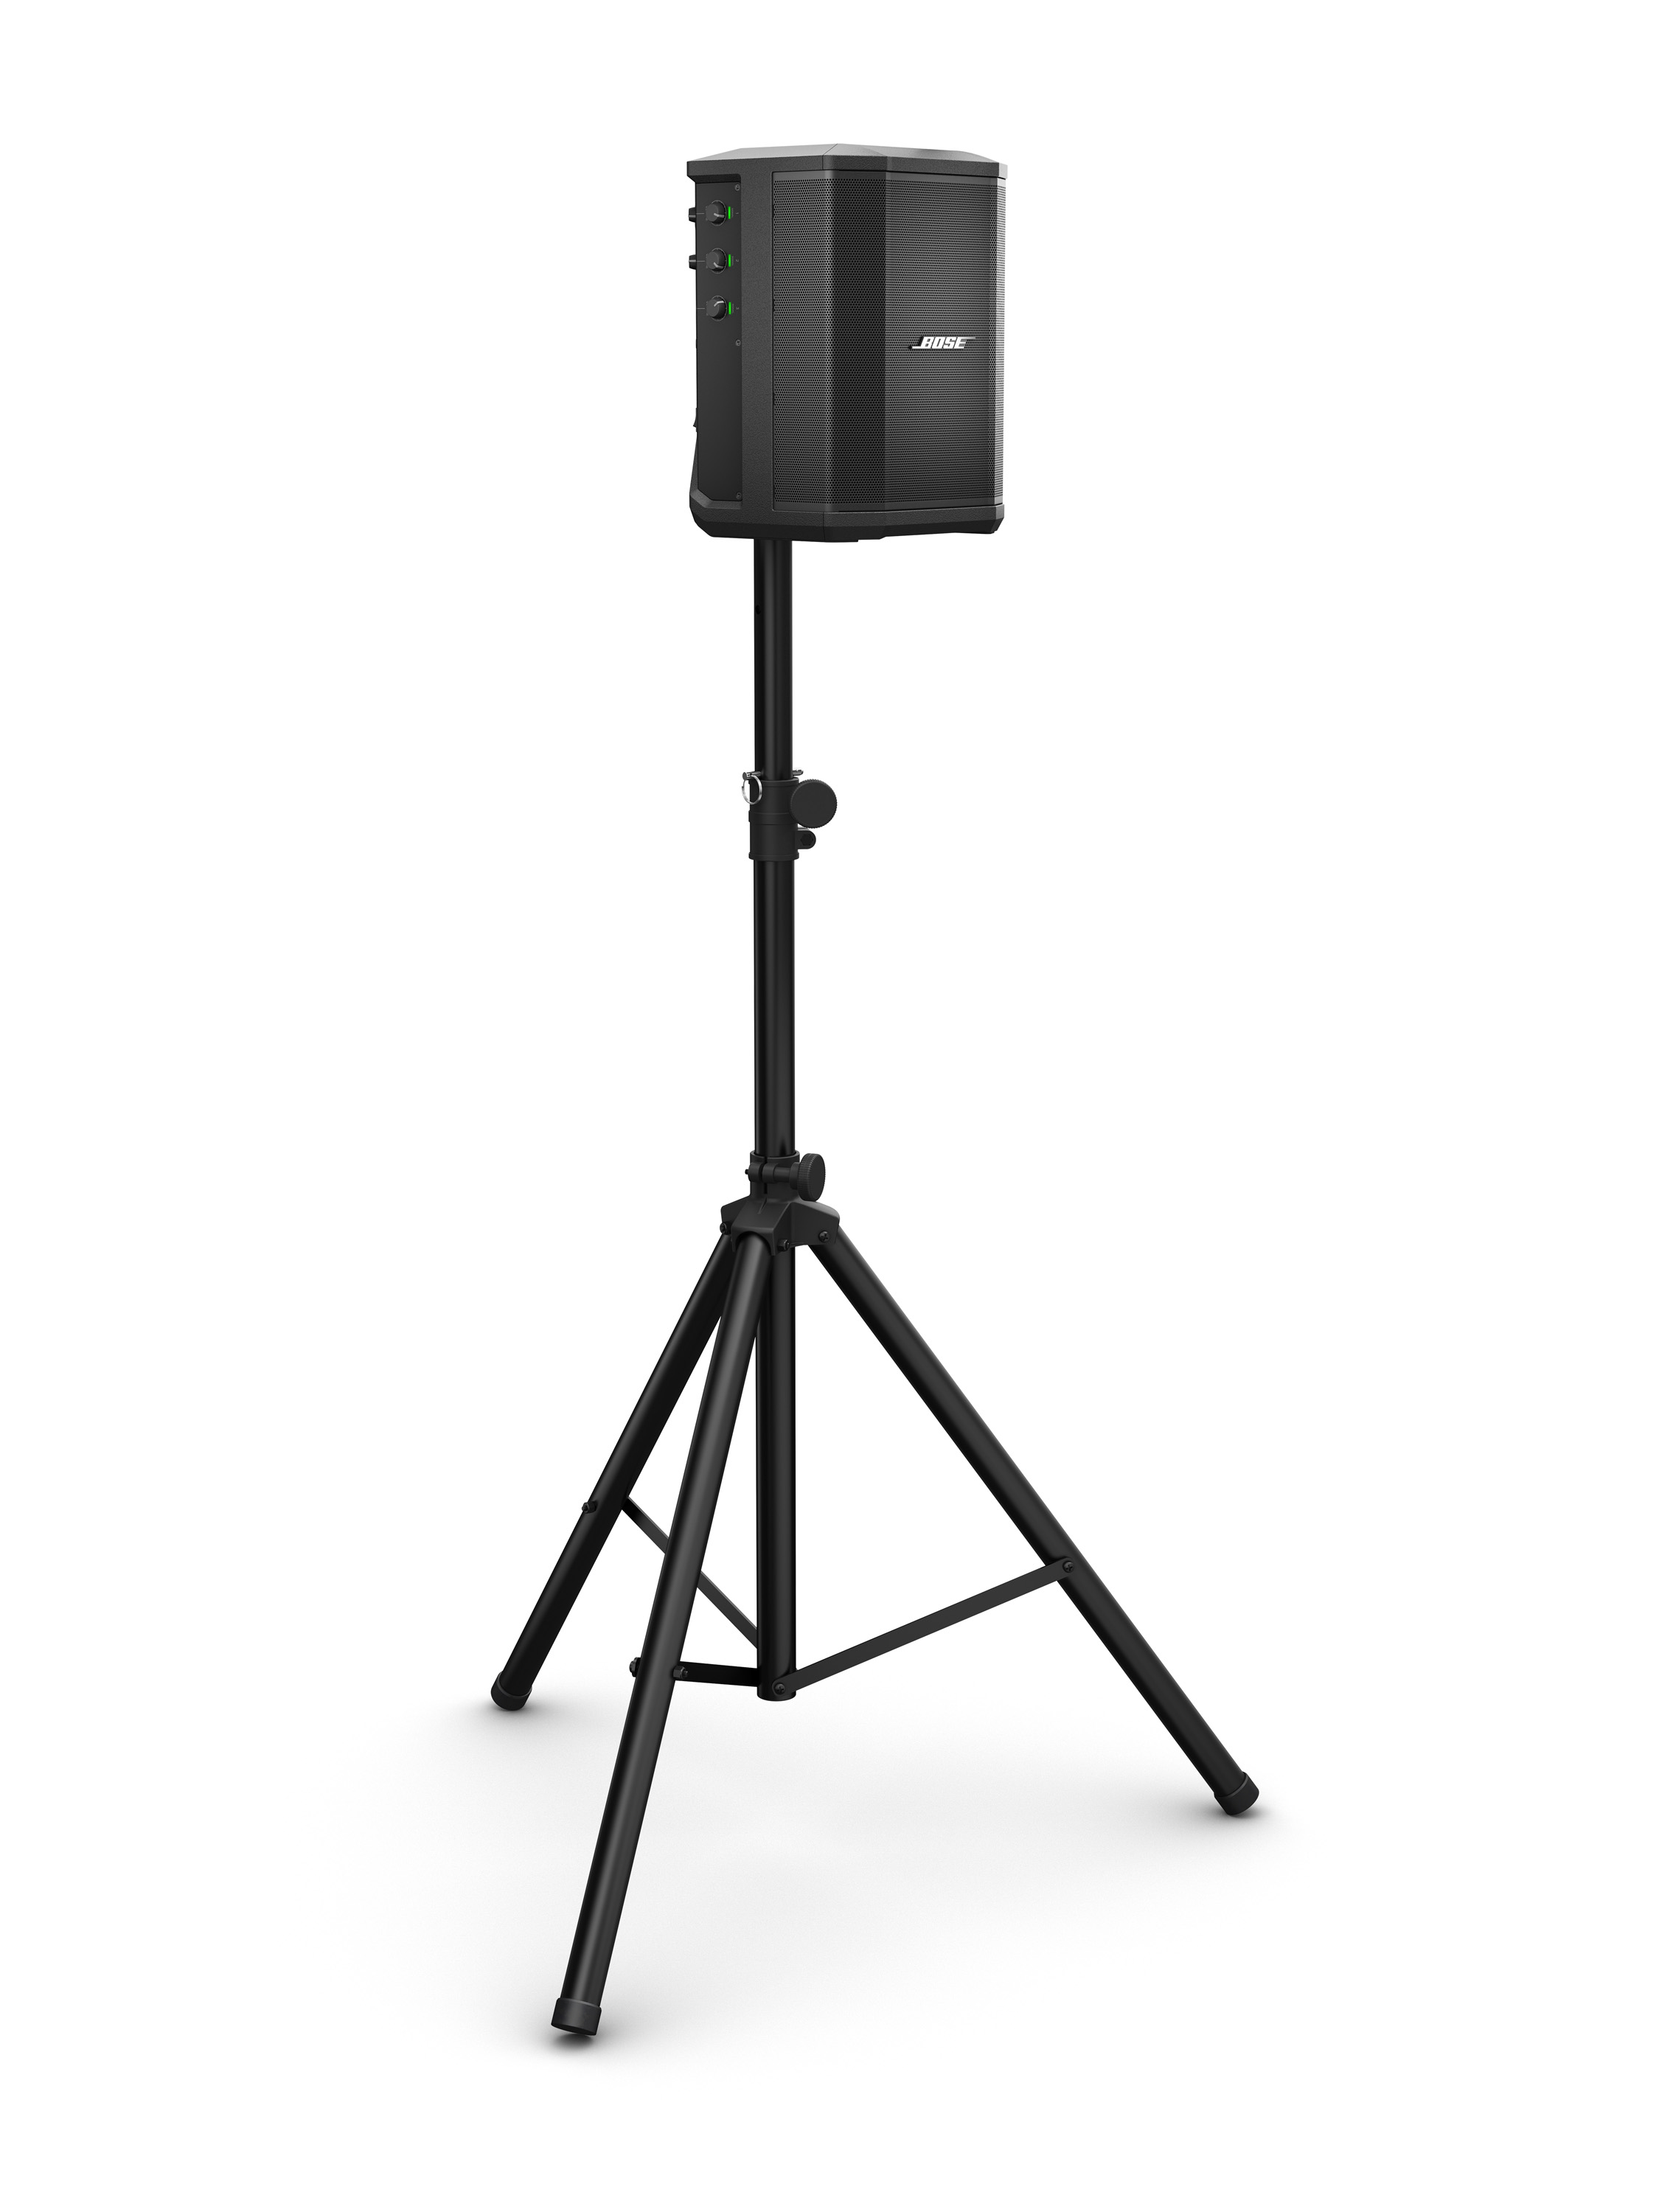 Bose S1 Pro - Sono Portable - Variation 2